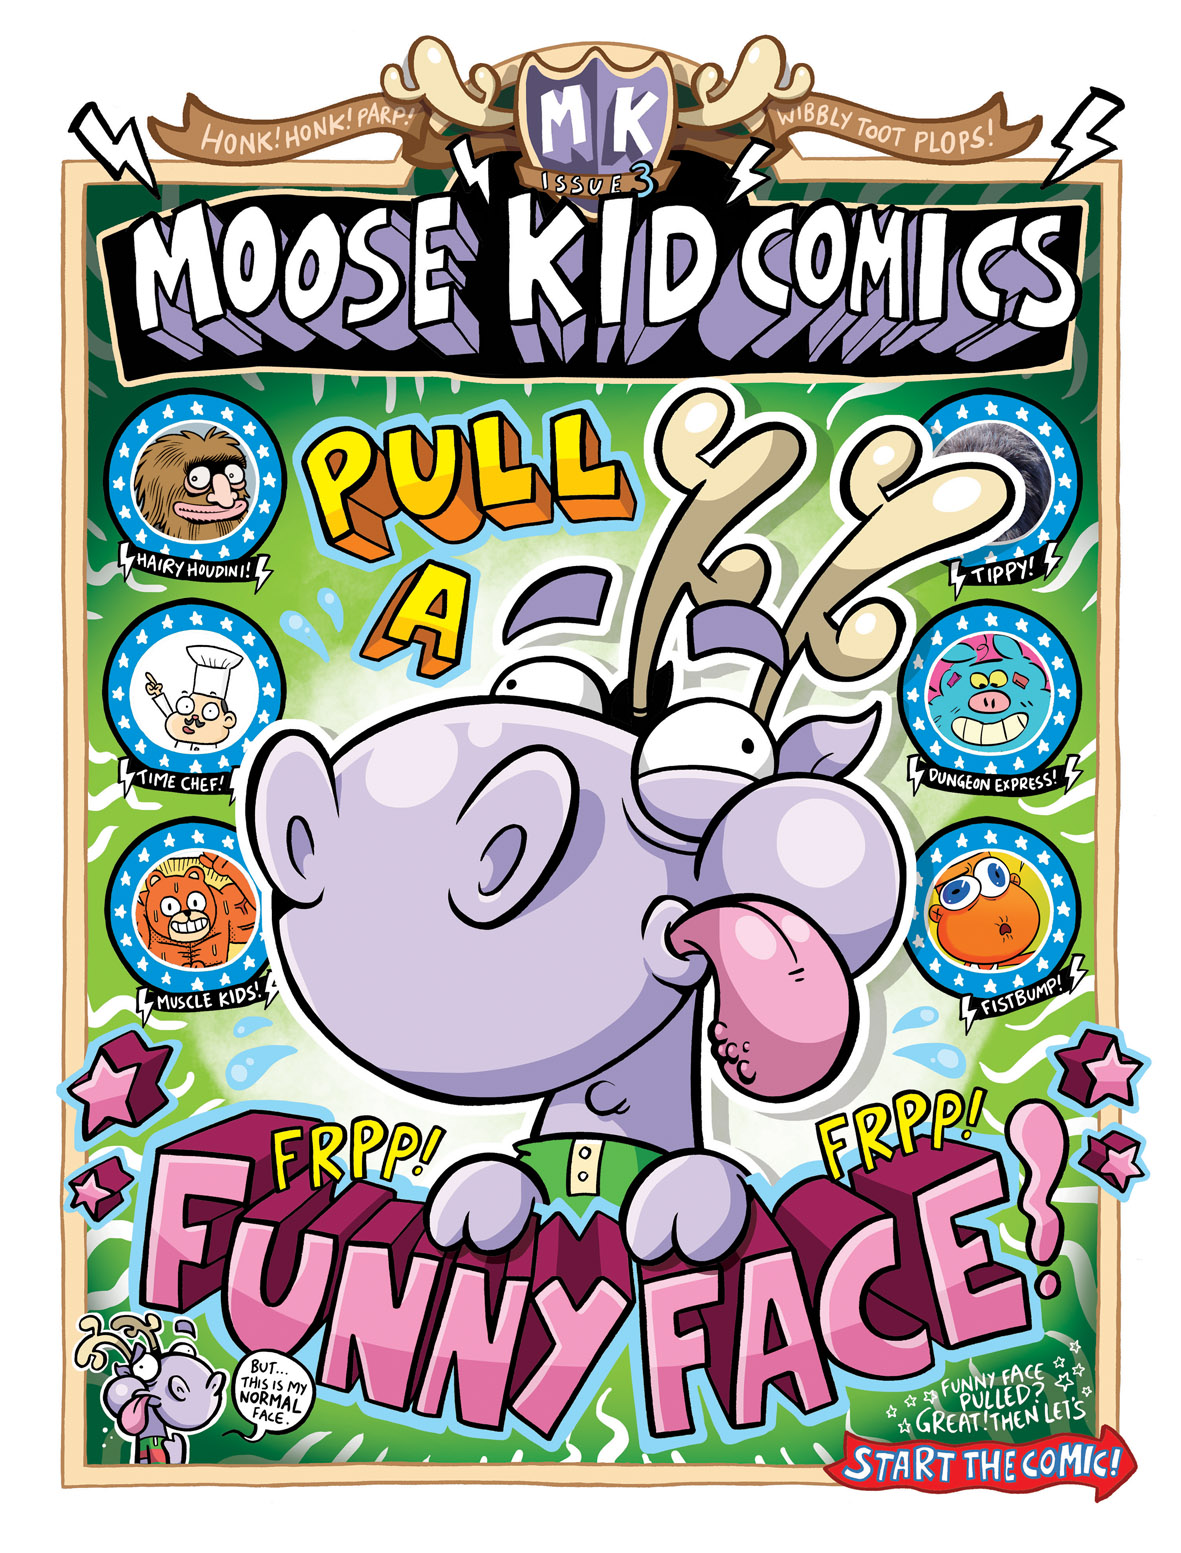 Moose Kid Comics Issue Three - Cover